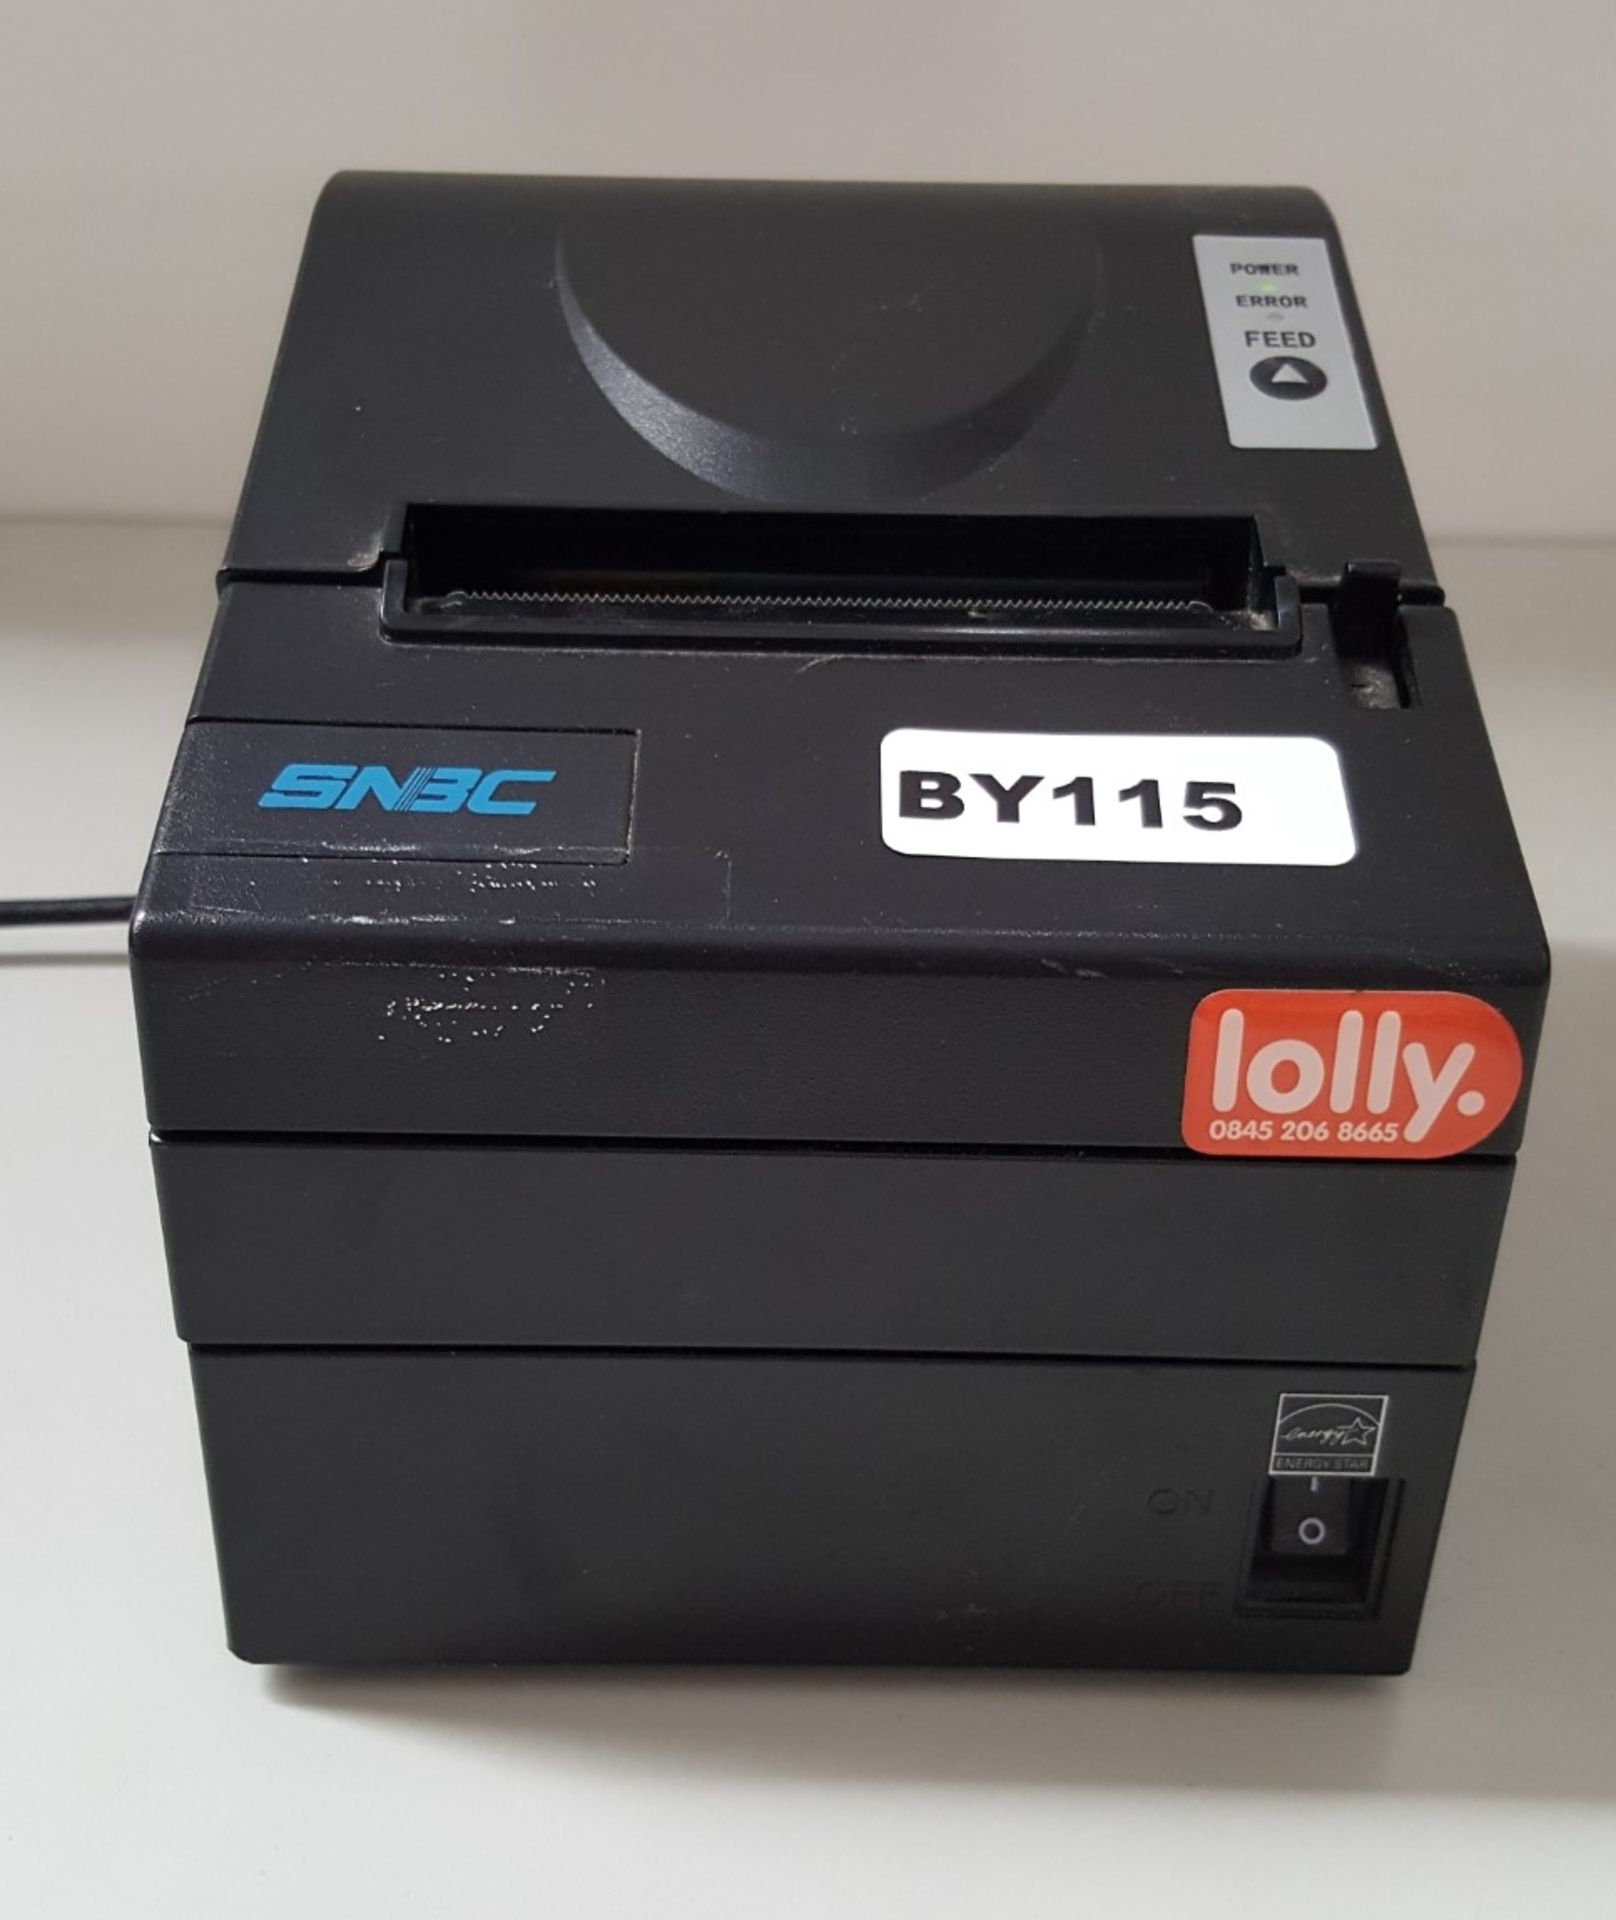 1 x SNBC BTP-R880NP USB Thermal Receipt Printer - Ref BY115 AC3 - Image 5 of 5